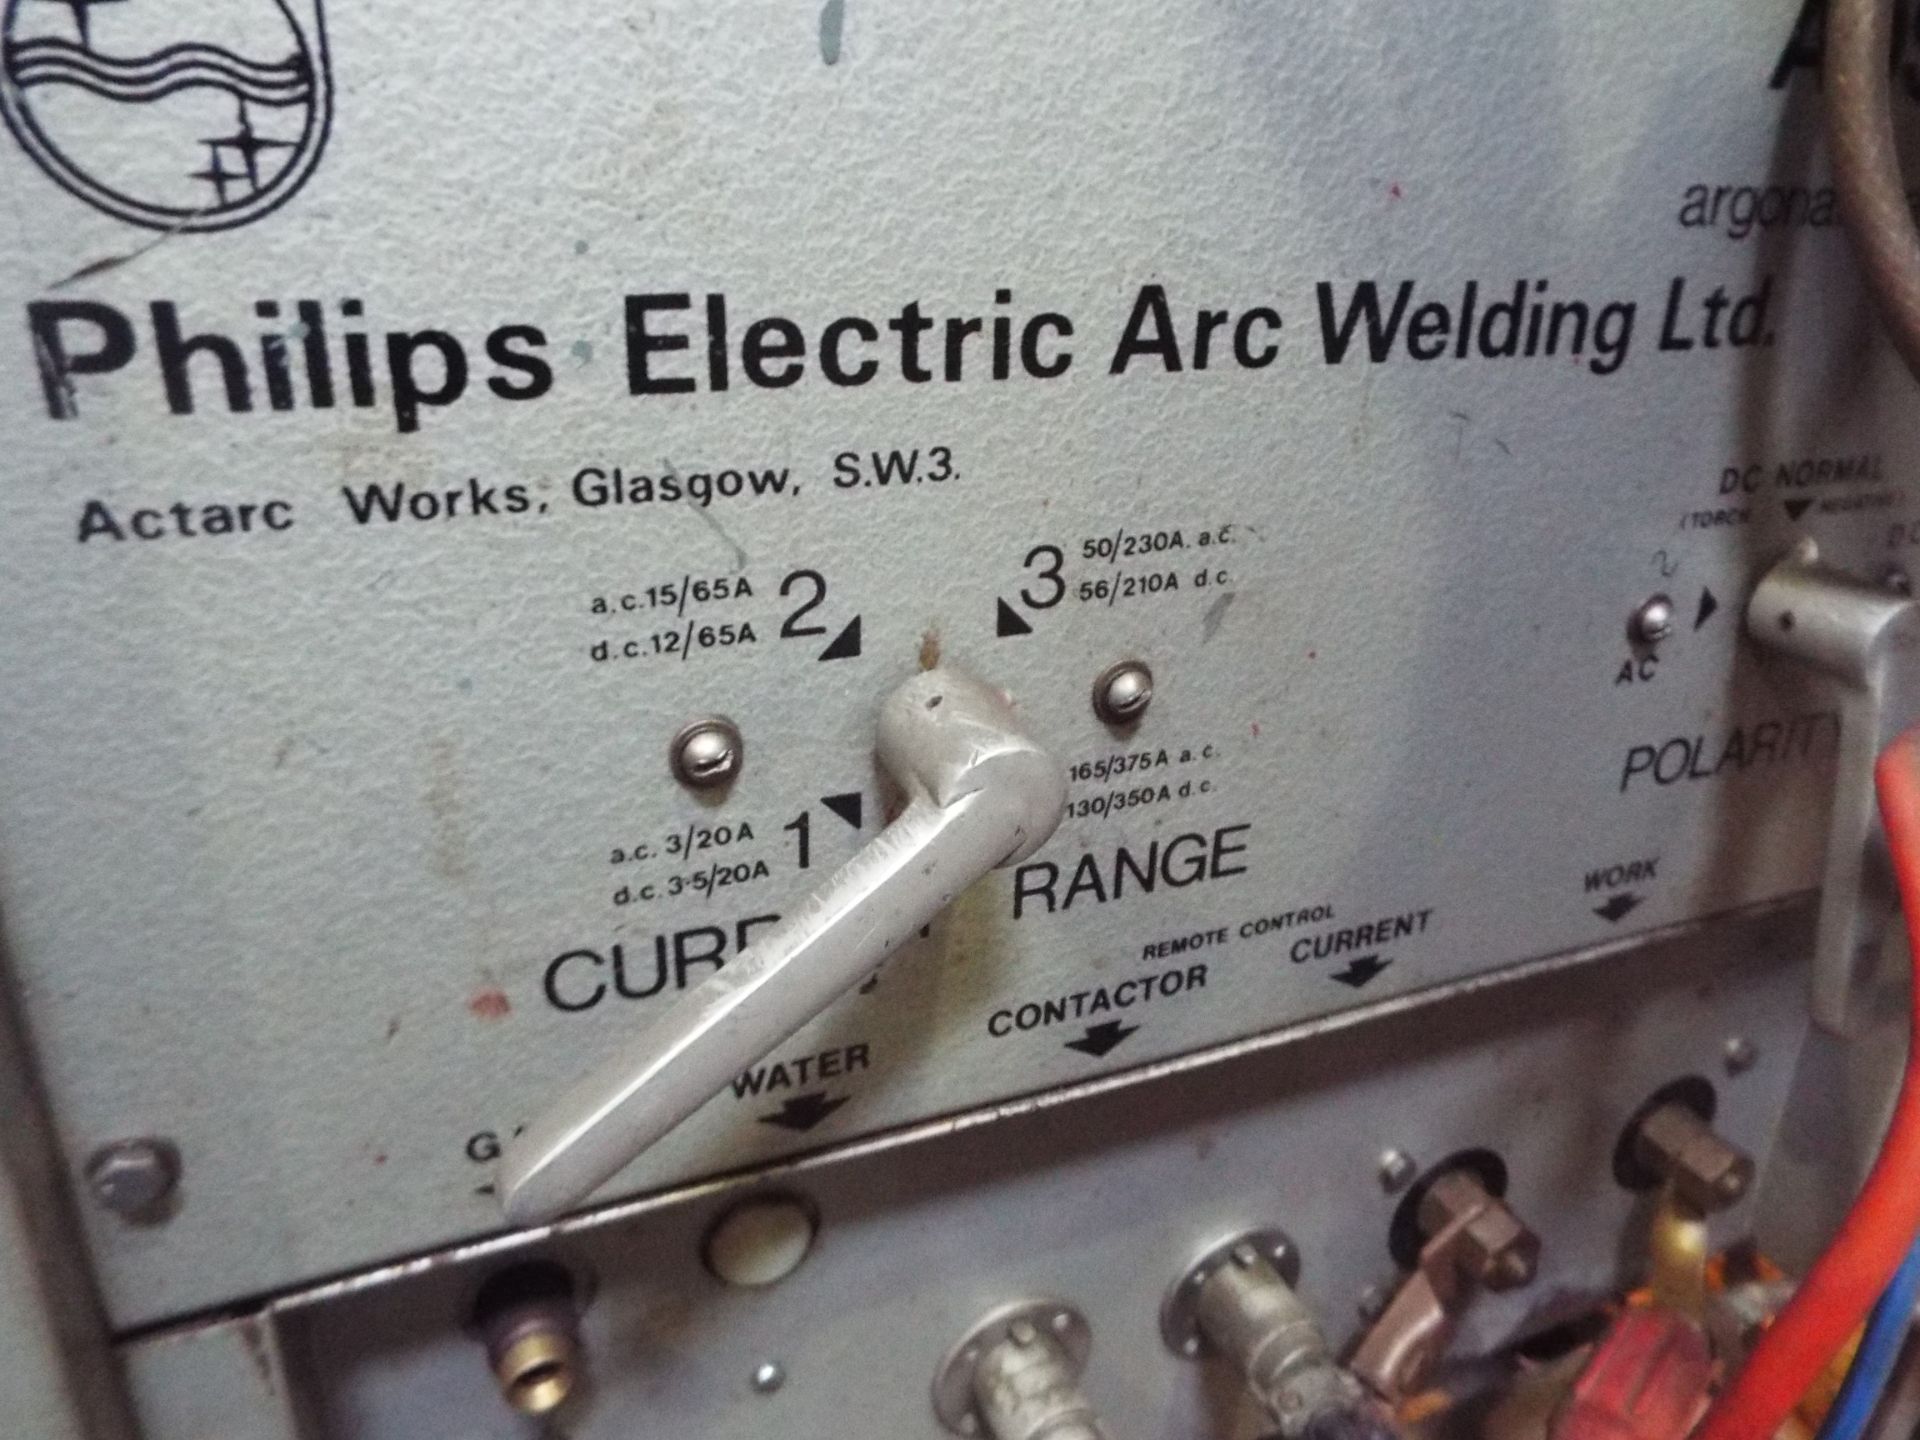 Philips ADS300 Argonarc AC/DC Welding Unit. - Bild 3 aus 8